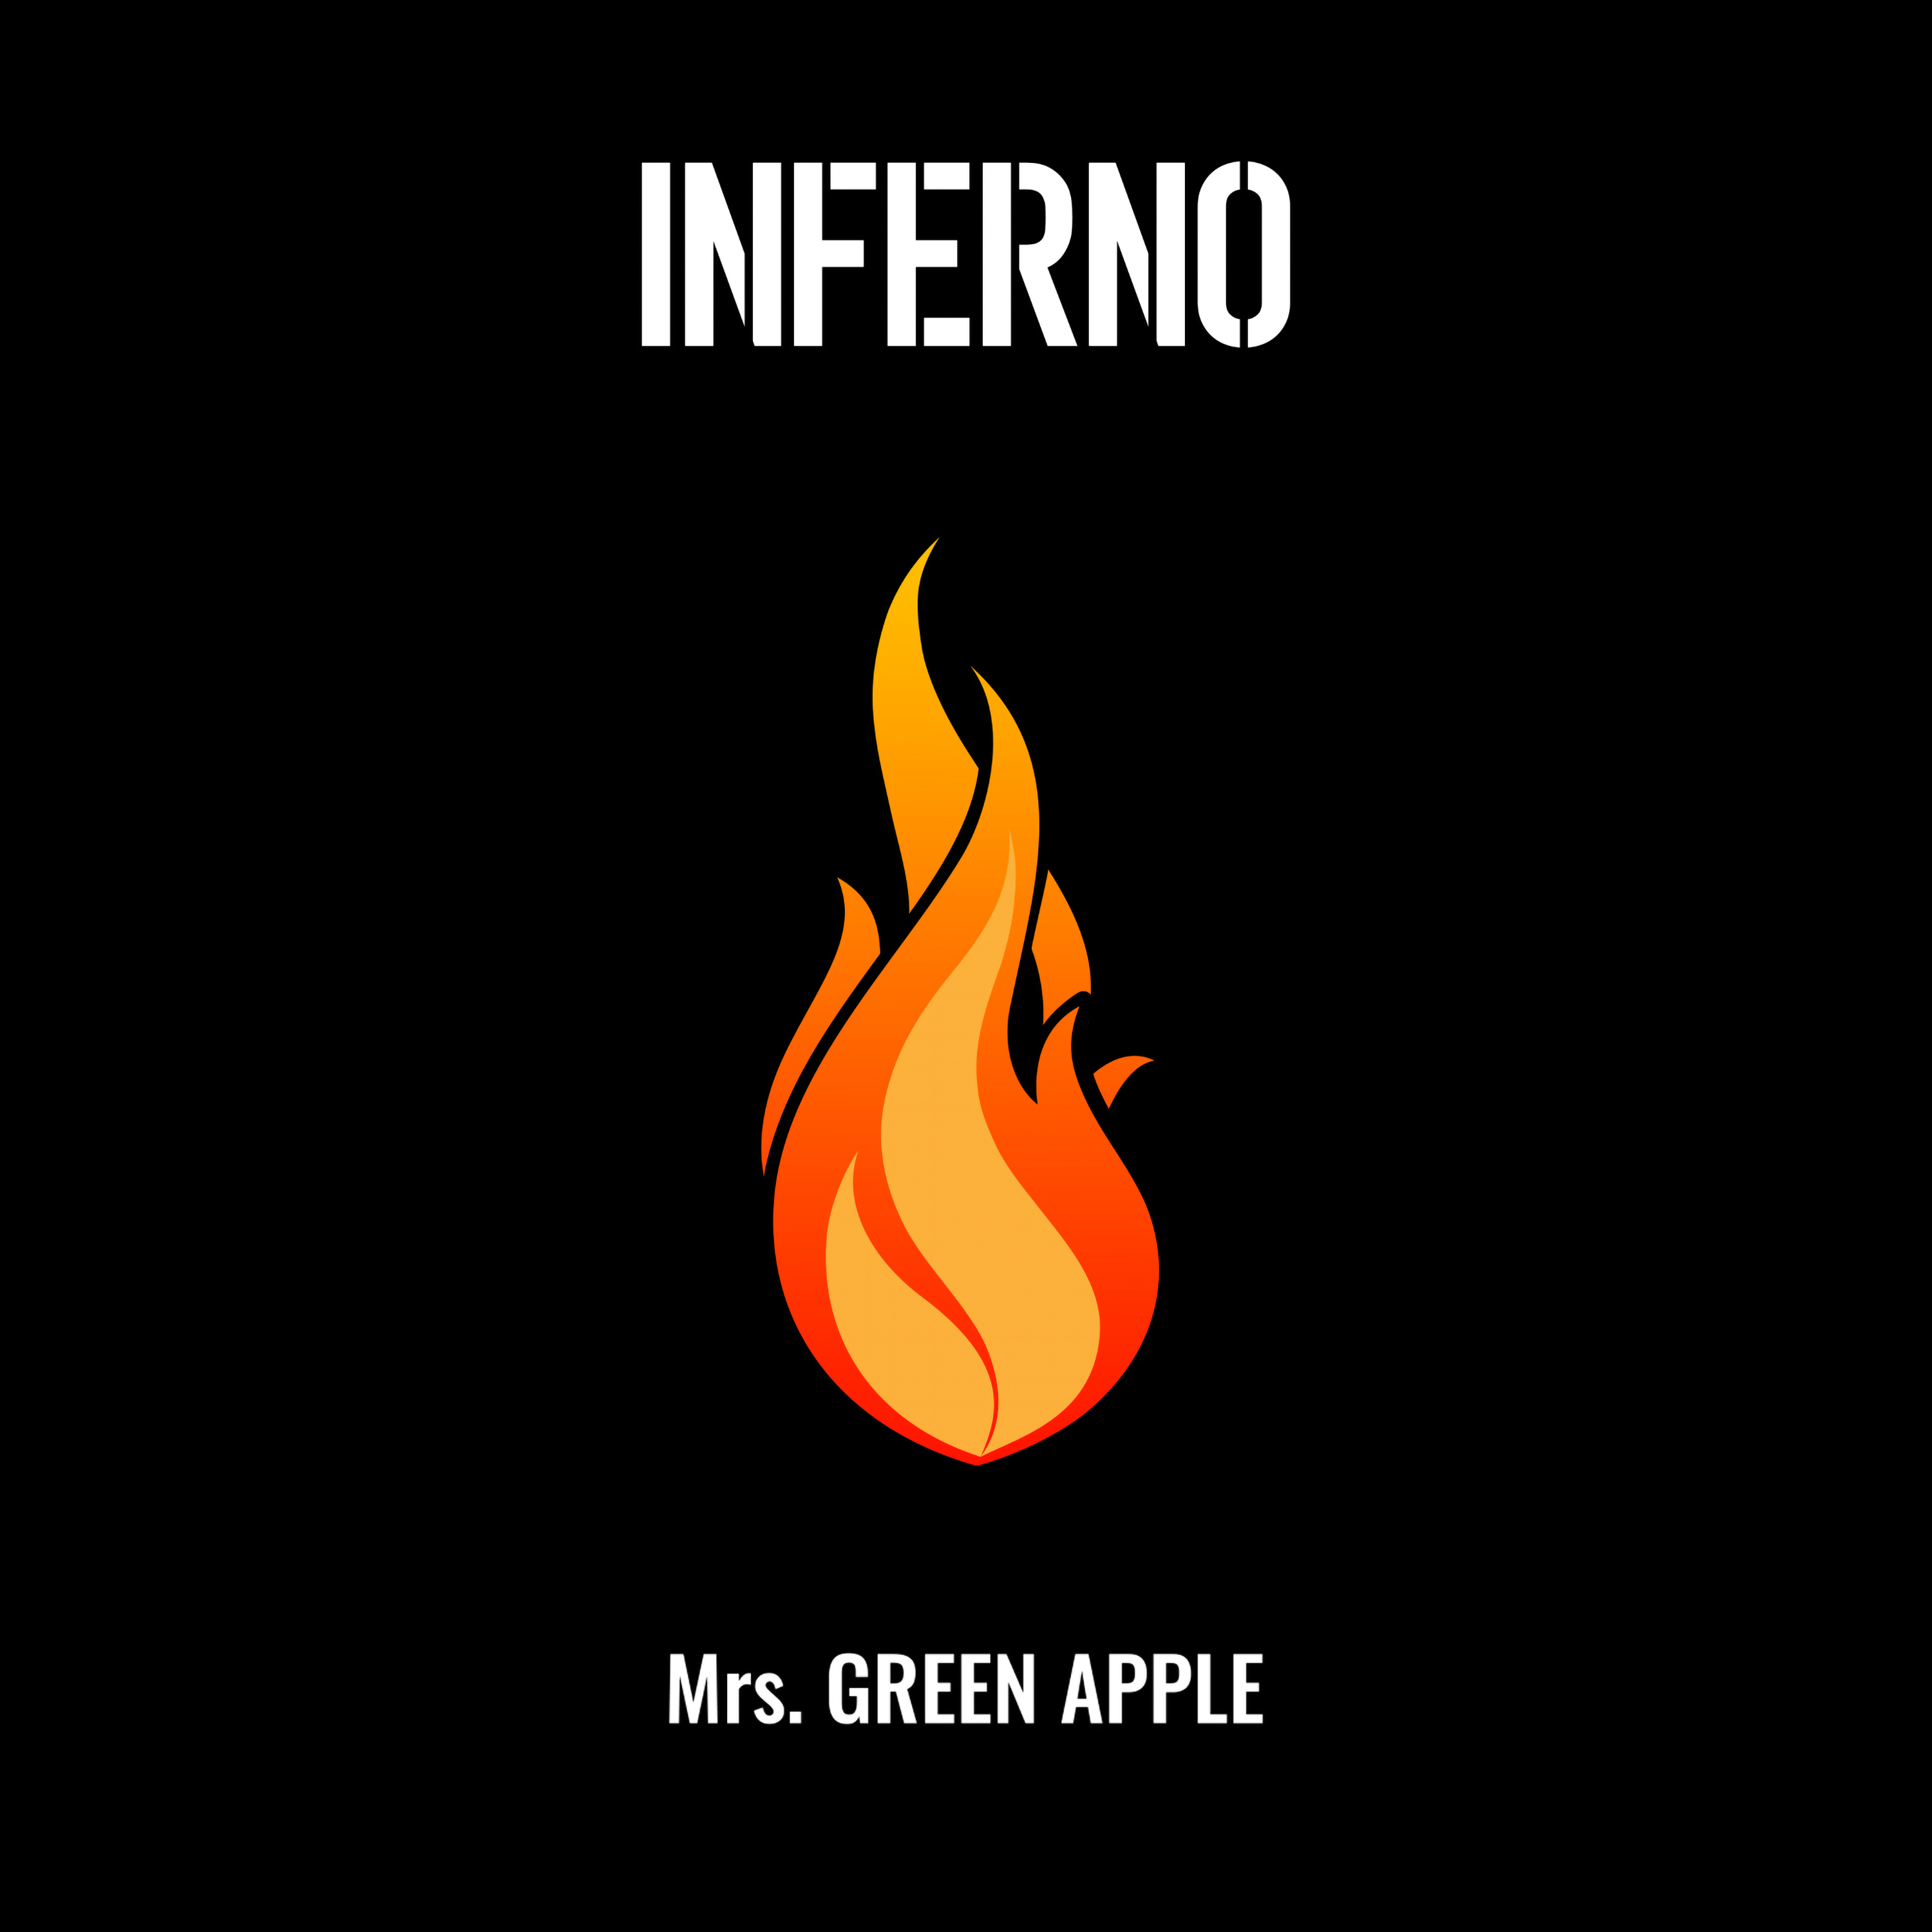 mrs. green apple inferno torrent